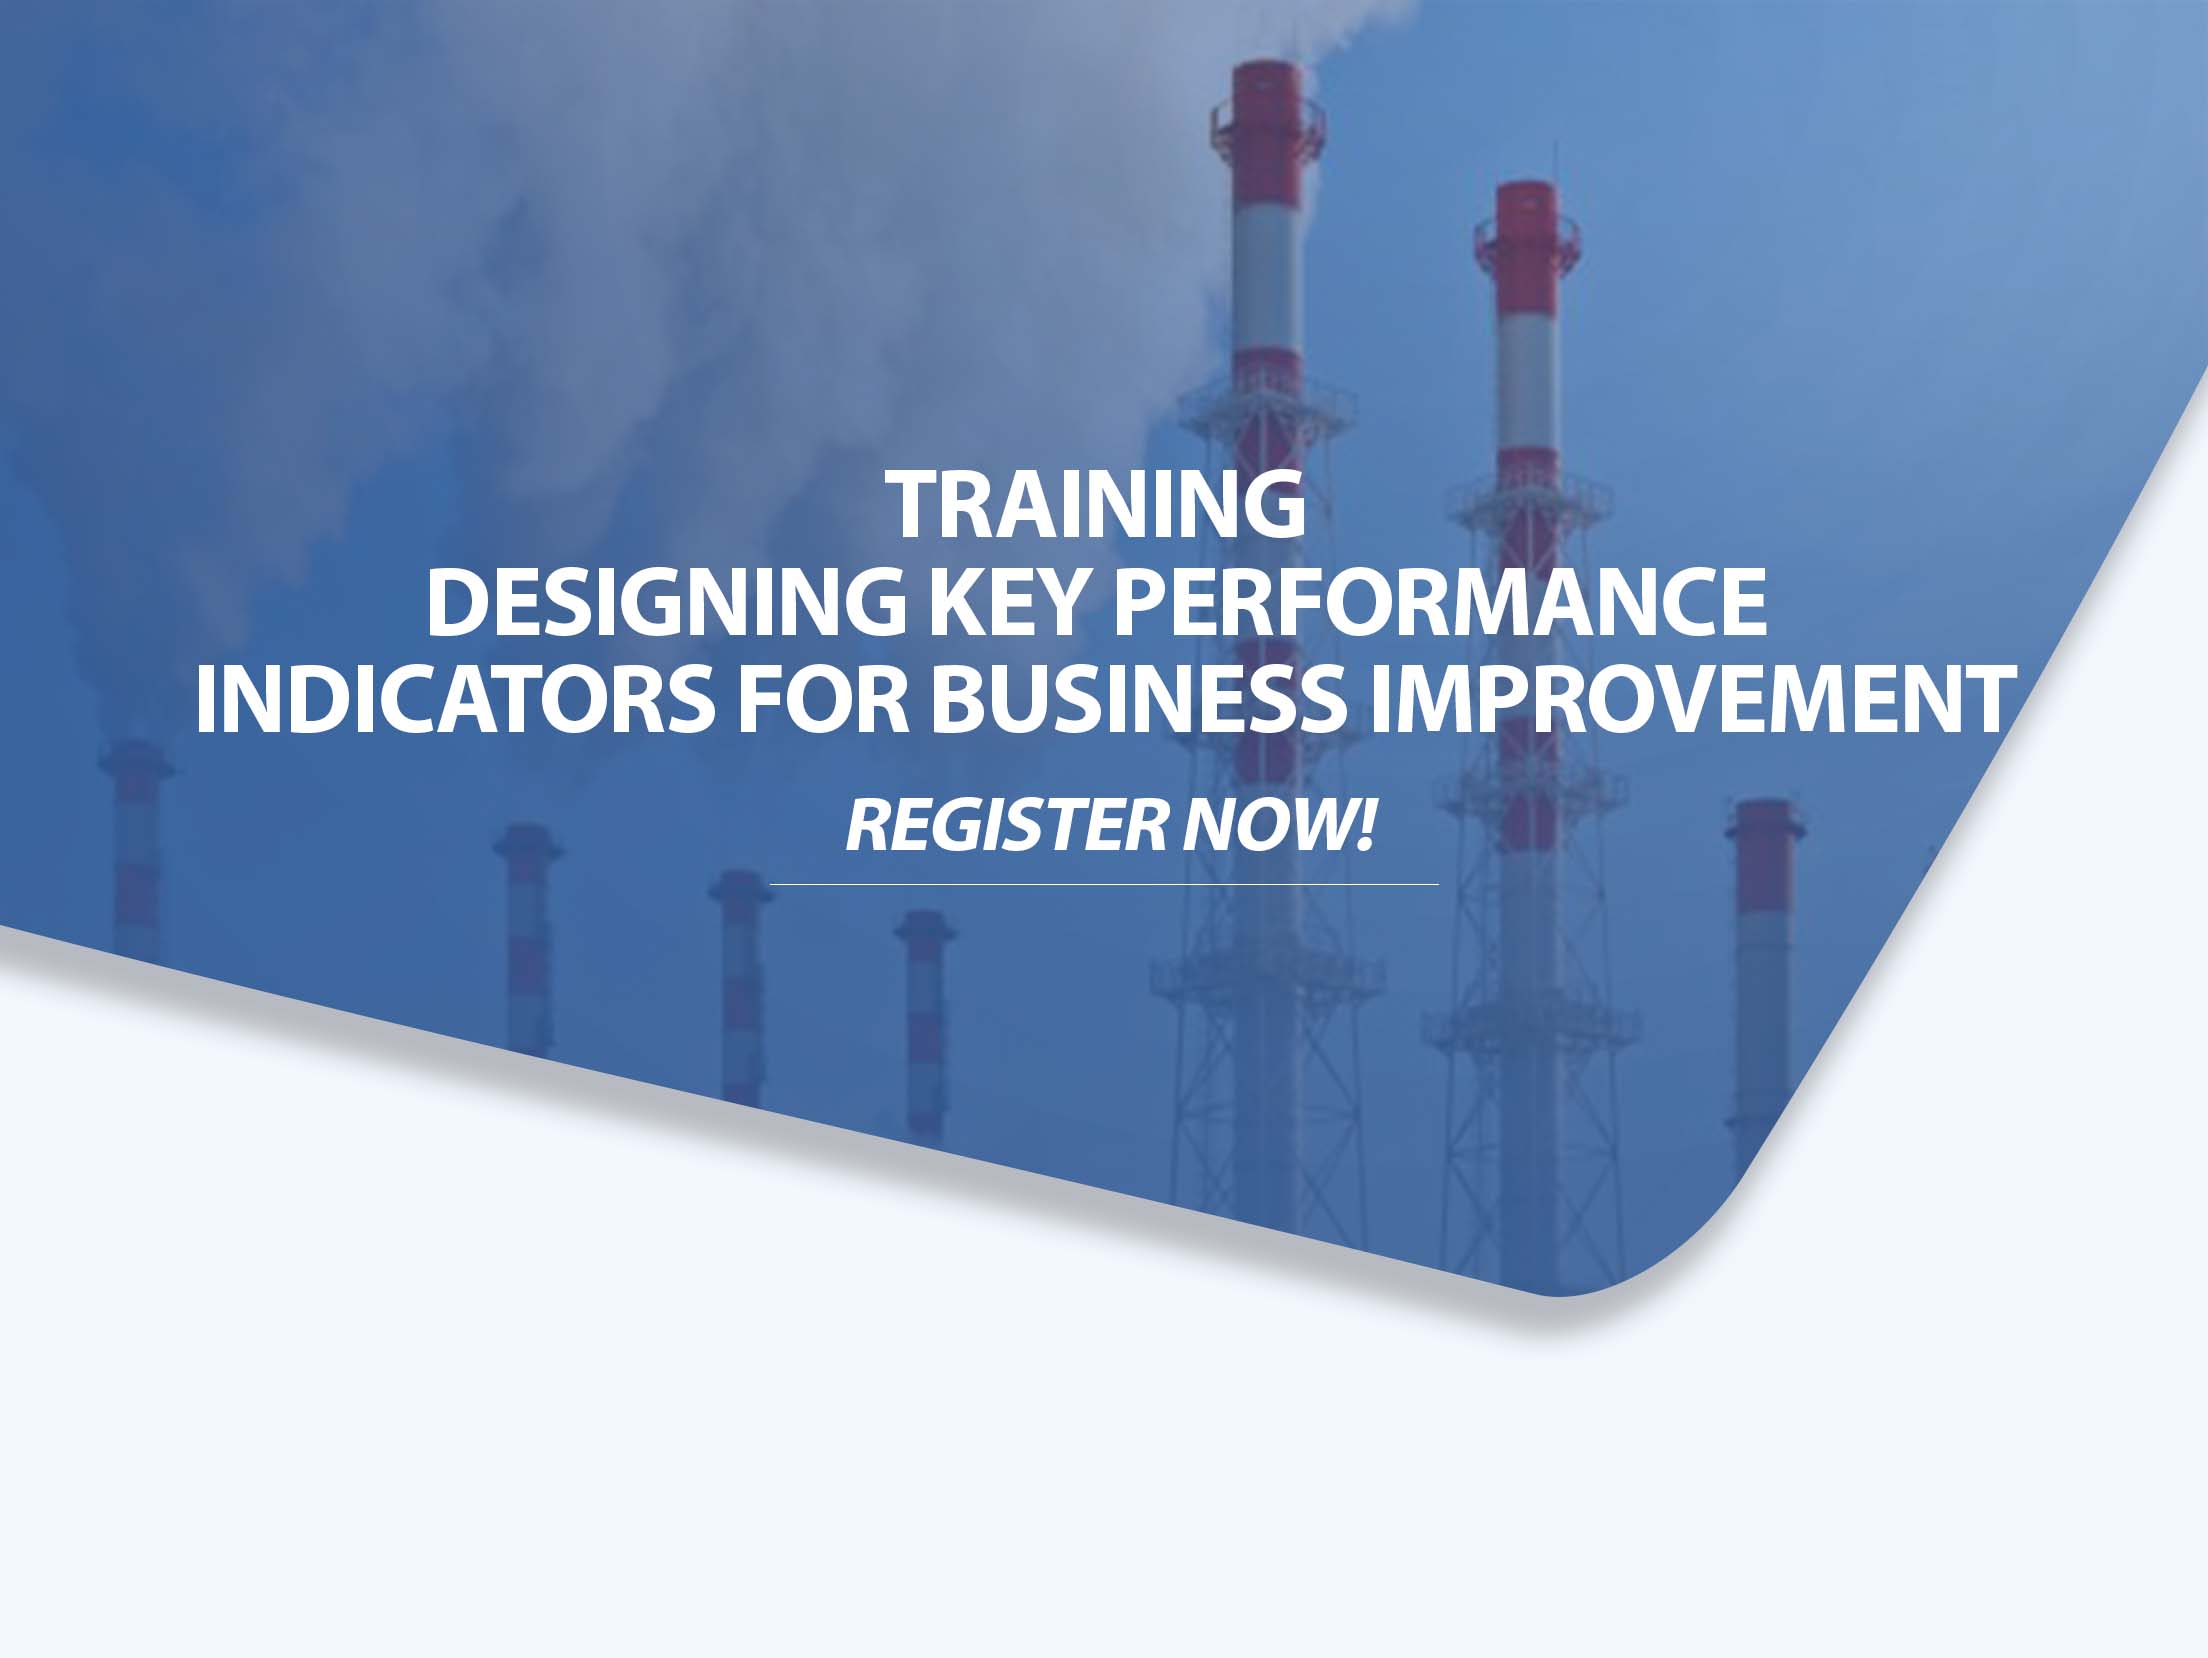 Training Designing Key Performance Indicators for Business Improvement